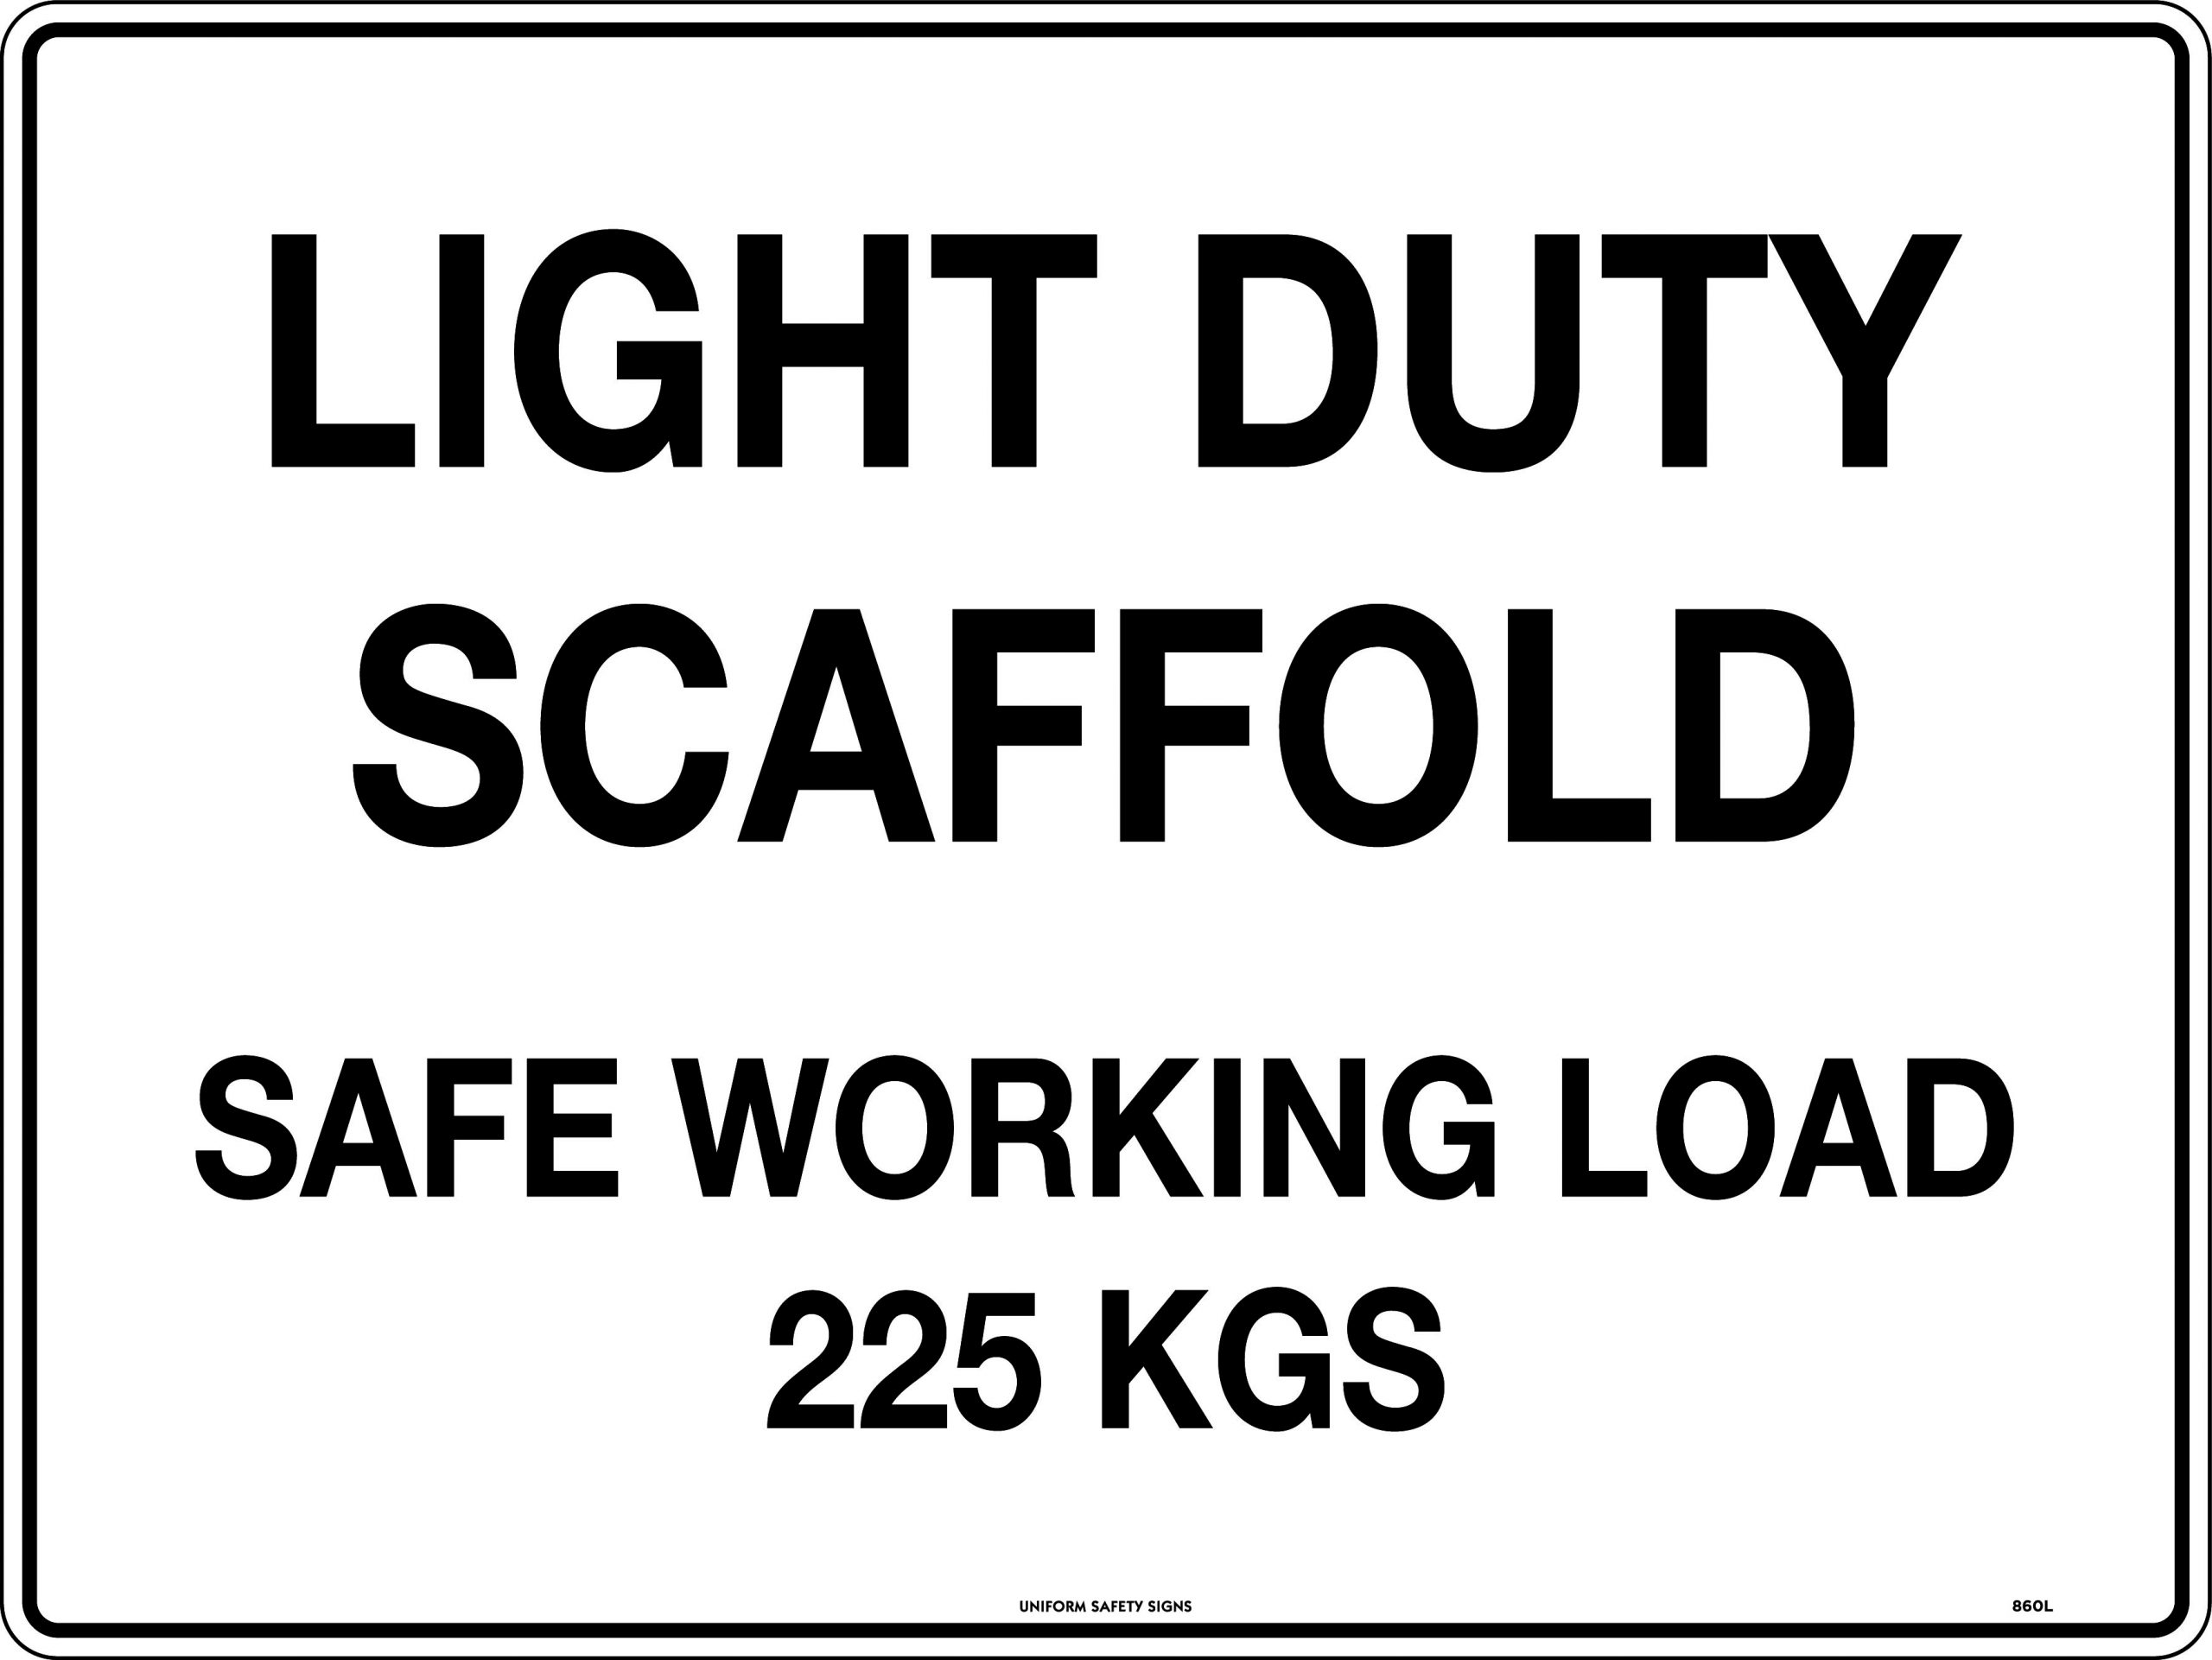 UNIFORM SAFETY 600X450MM CORFLUTE LIGHT DUTY SCAFFOLD SAFE WORKING LOA